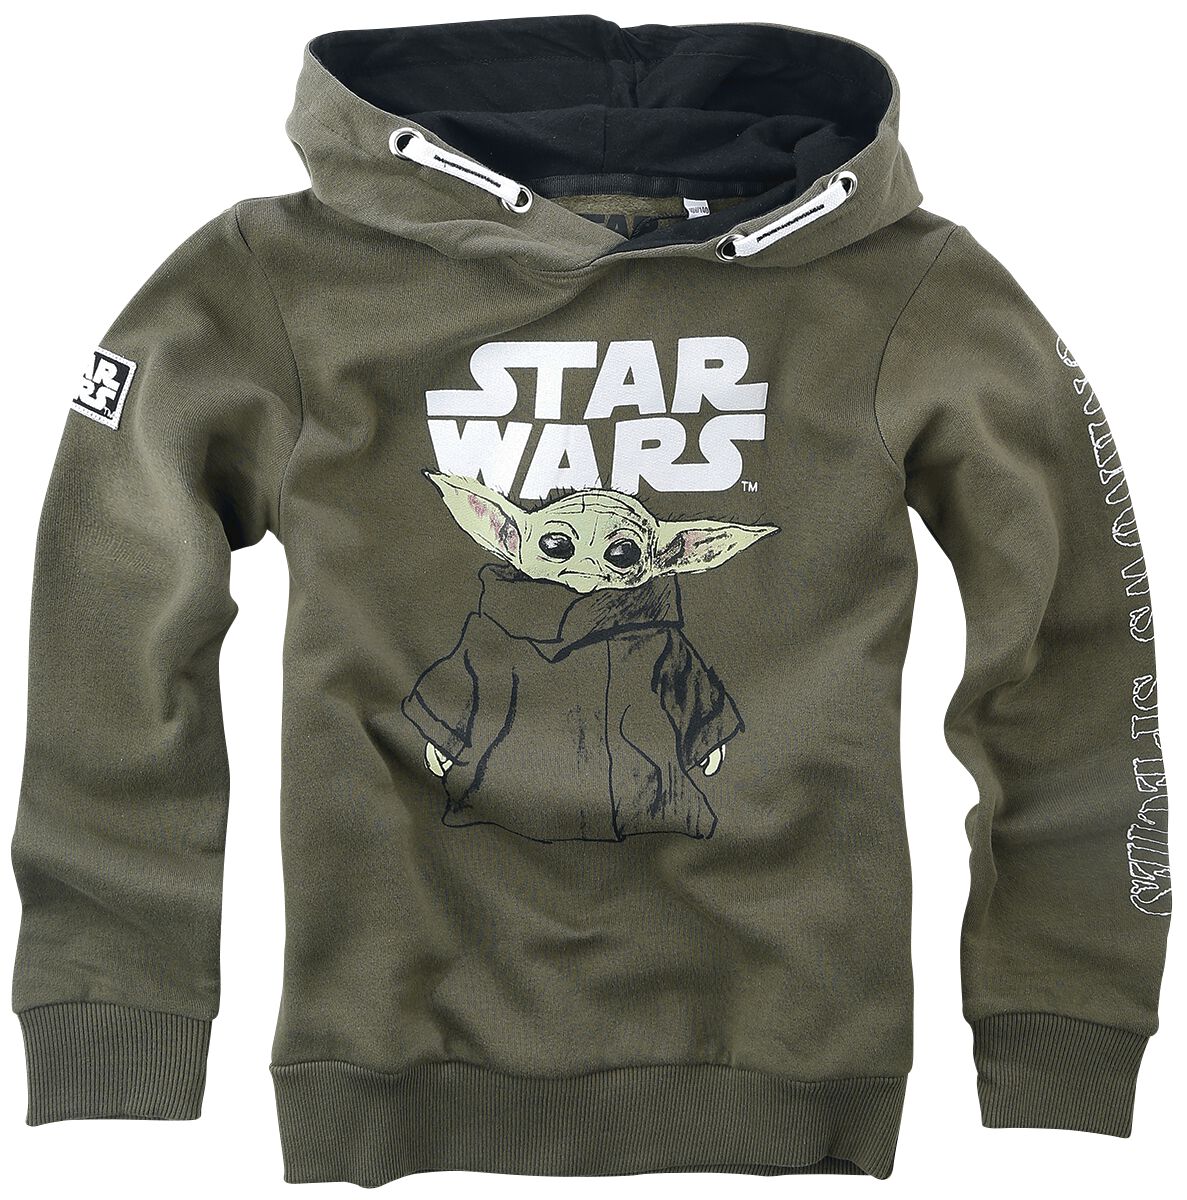 Star Wars Kapuzenpullover - Kids - The Mandalorian - Grogu - Sketch - 116 - Größe 116 - khaki  - EMP exklusives Merchandise!